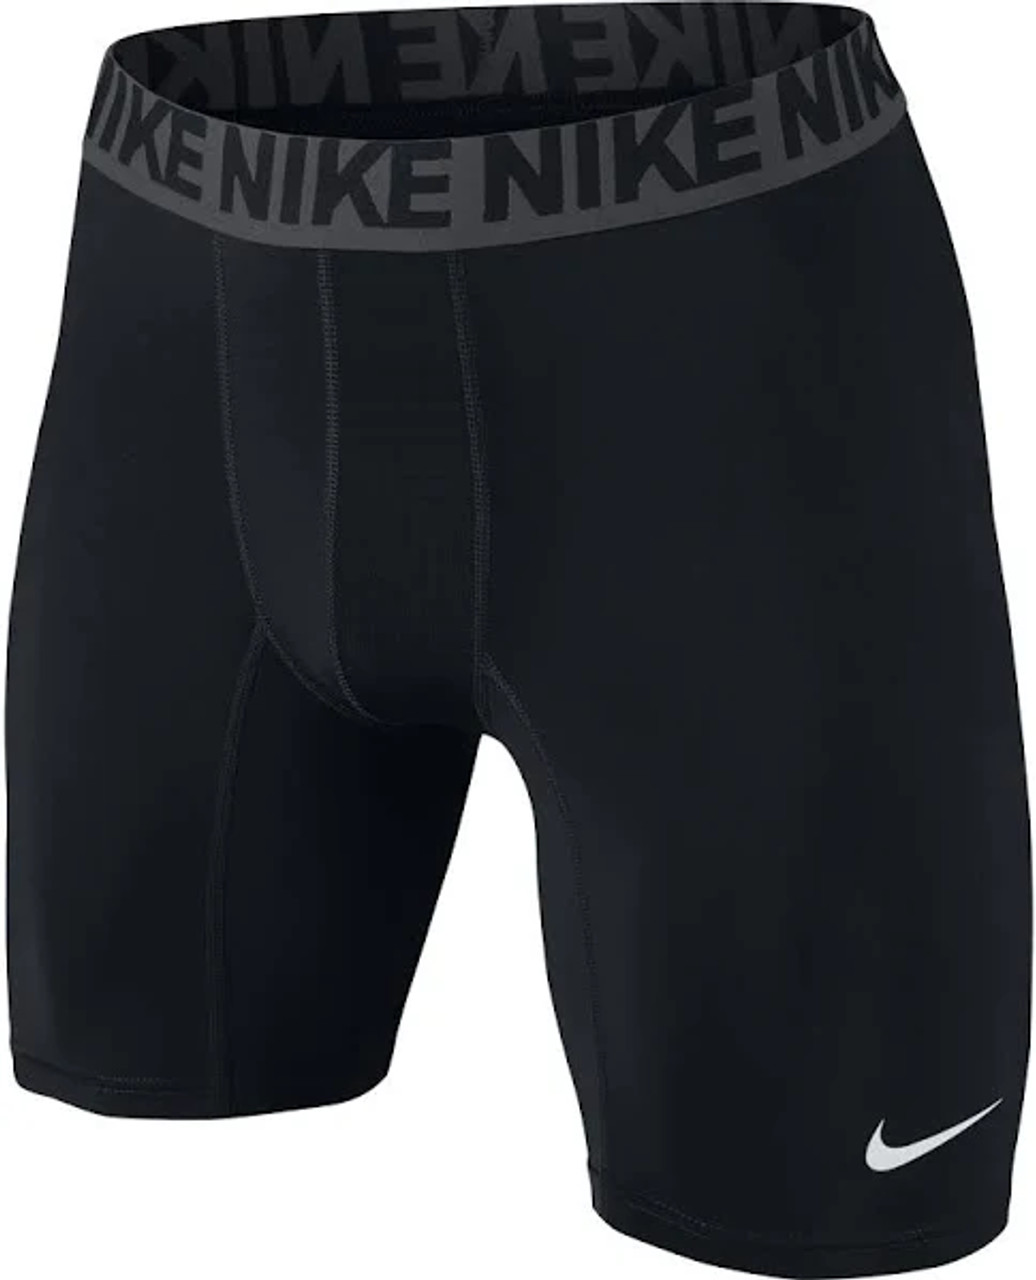 NIKE Solid Men Grey Compression Shorts - Buy CARBON HEATHER/BLACK